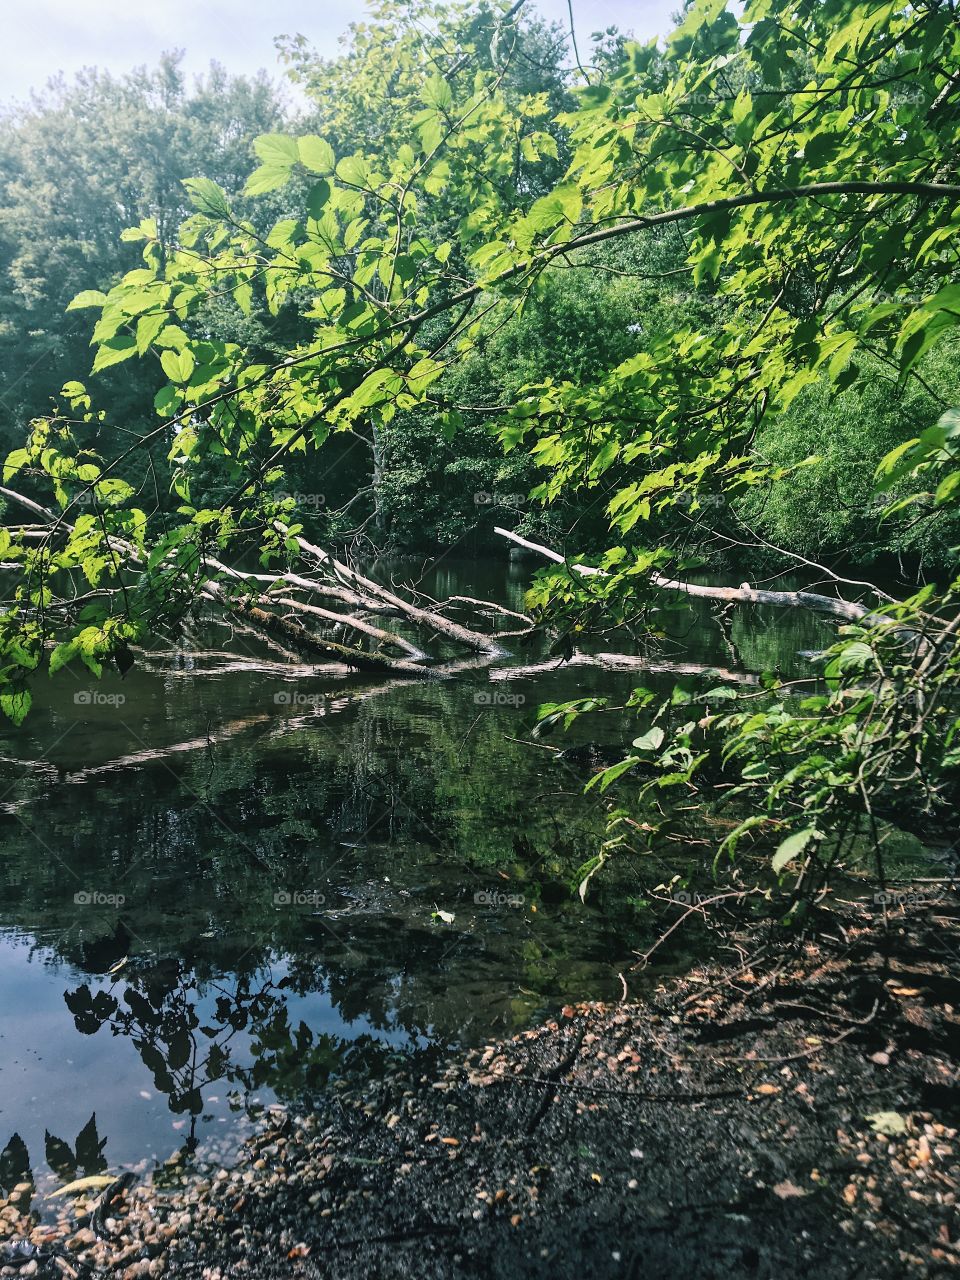 A calm summer day by a vernal pond